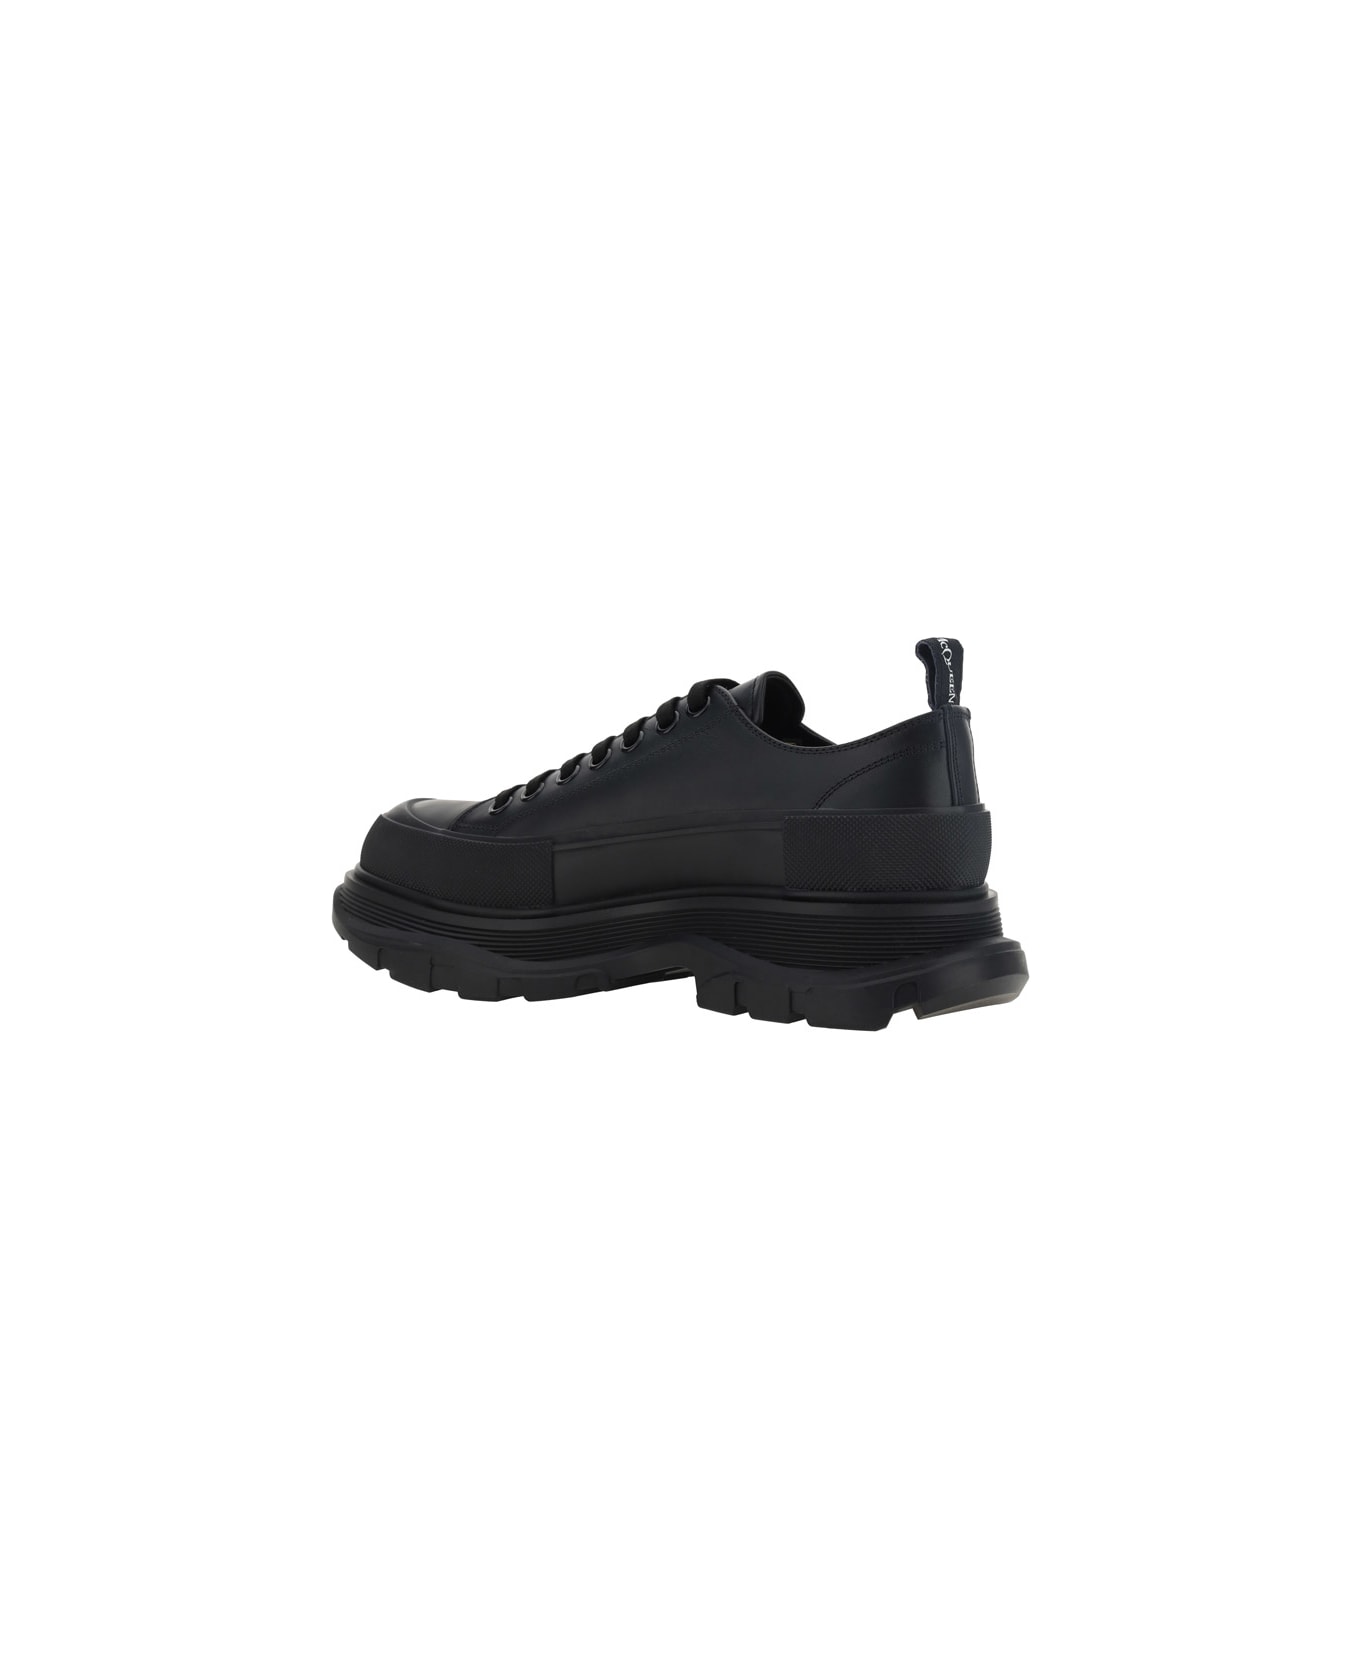 Alexander McQueen Tread Slick Sneakers - Black/white